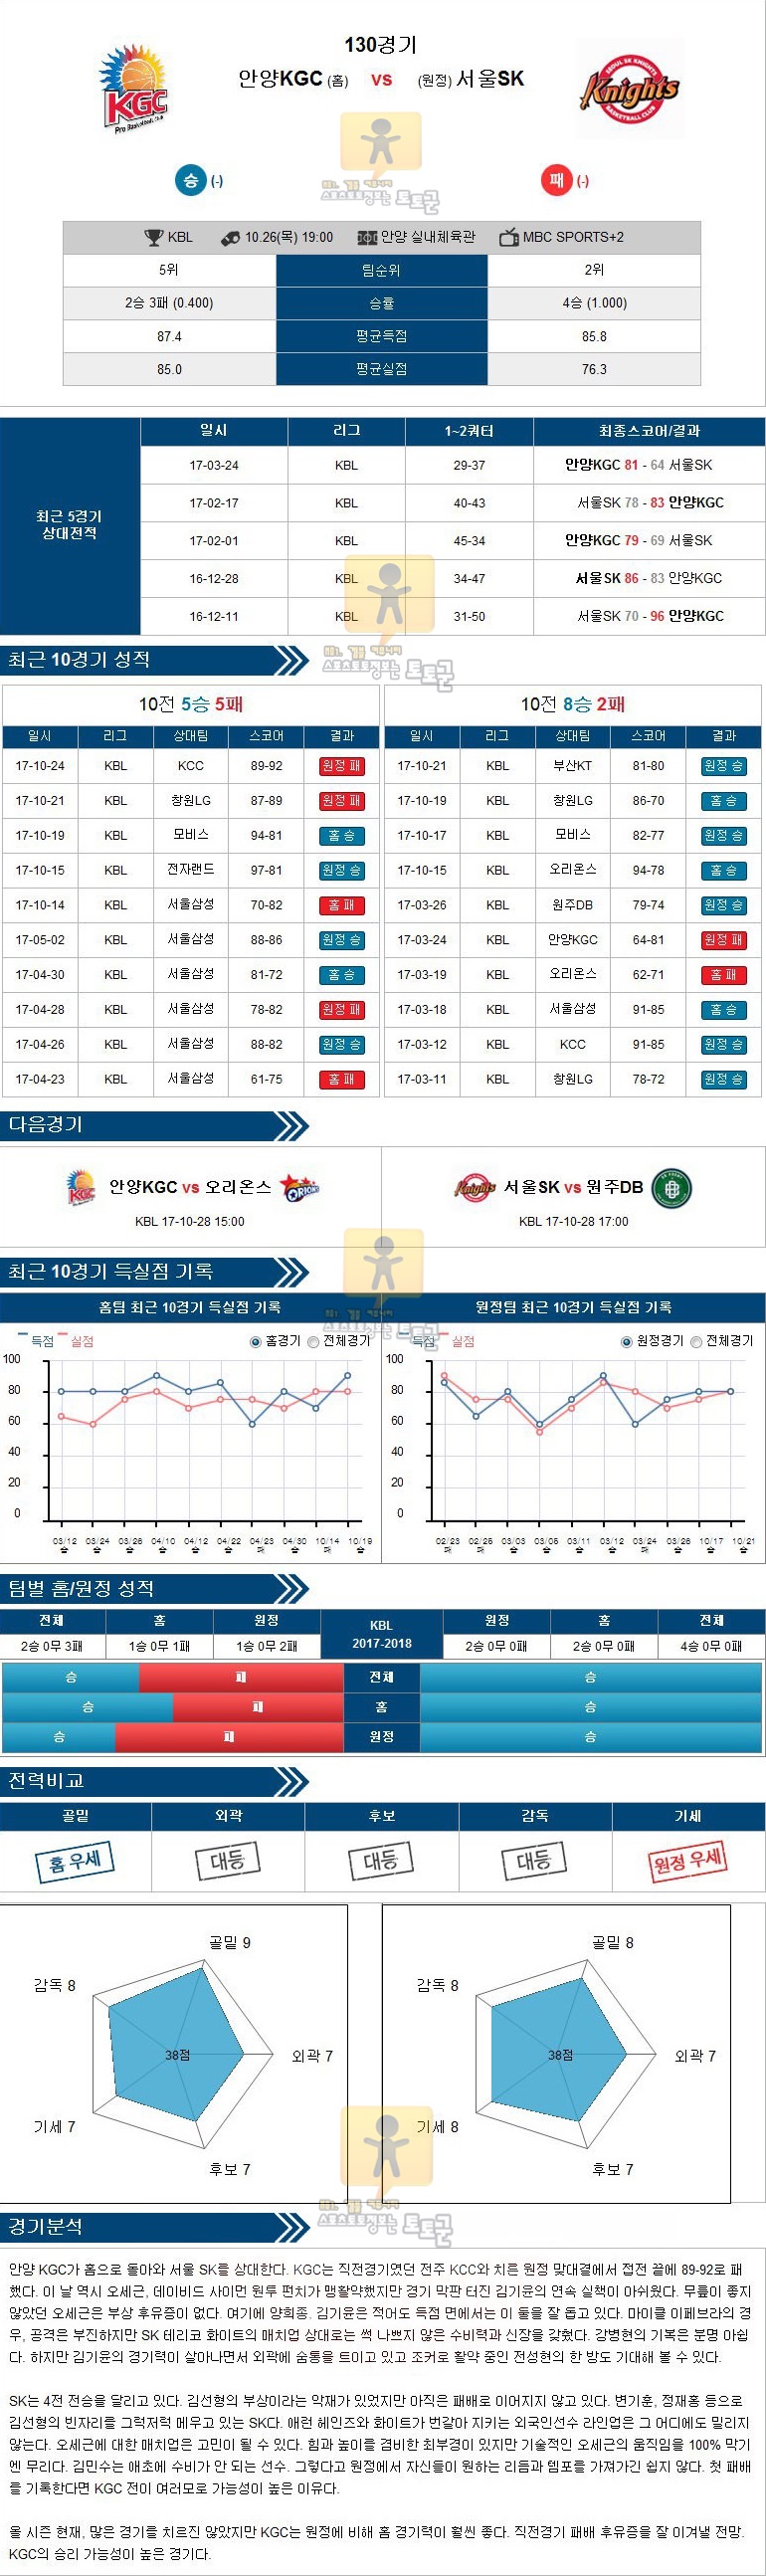 [KBL] 10월 26일 19:00 프로농구분석 안양인삼KGC VS 서울SK